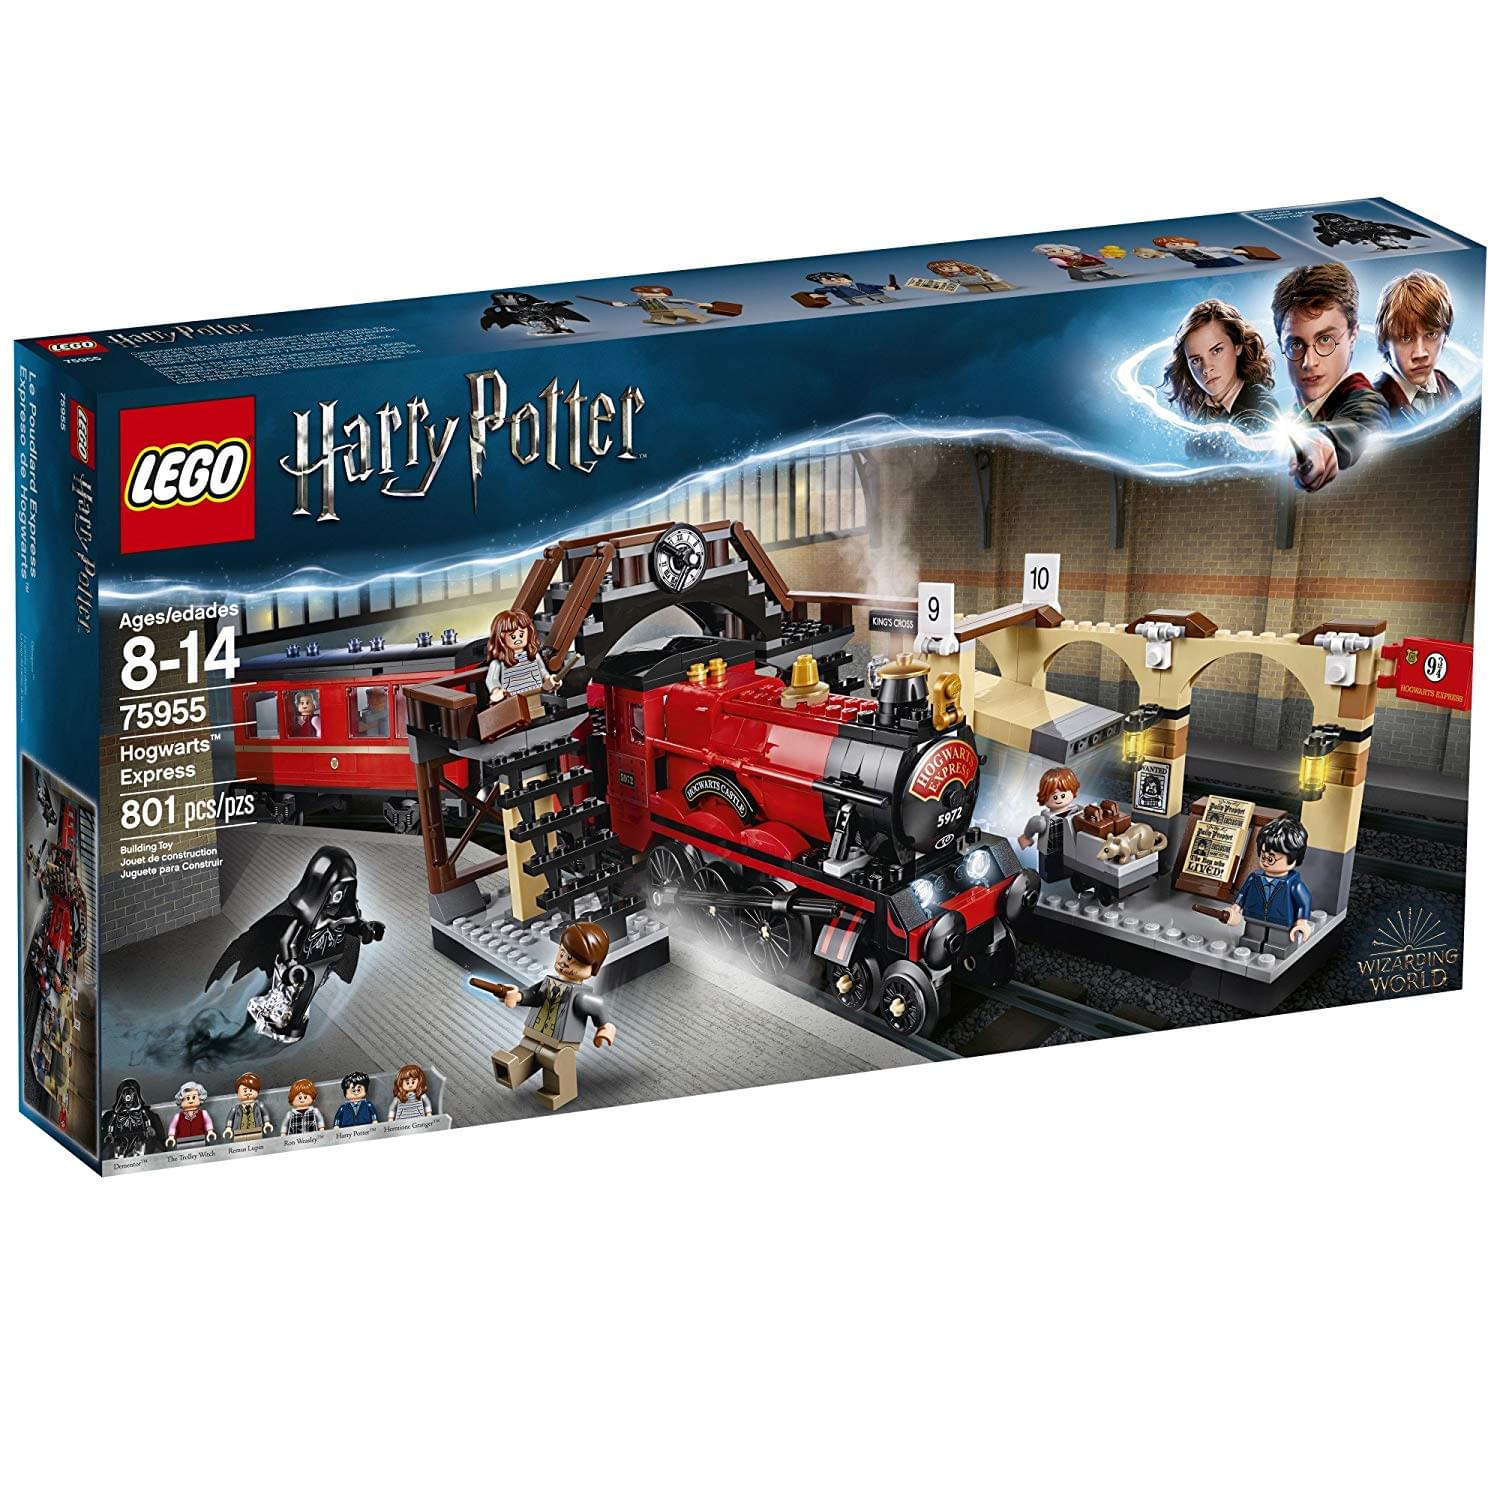 Harry Potter LEGO Hogwarts Express Building Kit | 801 Pieces